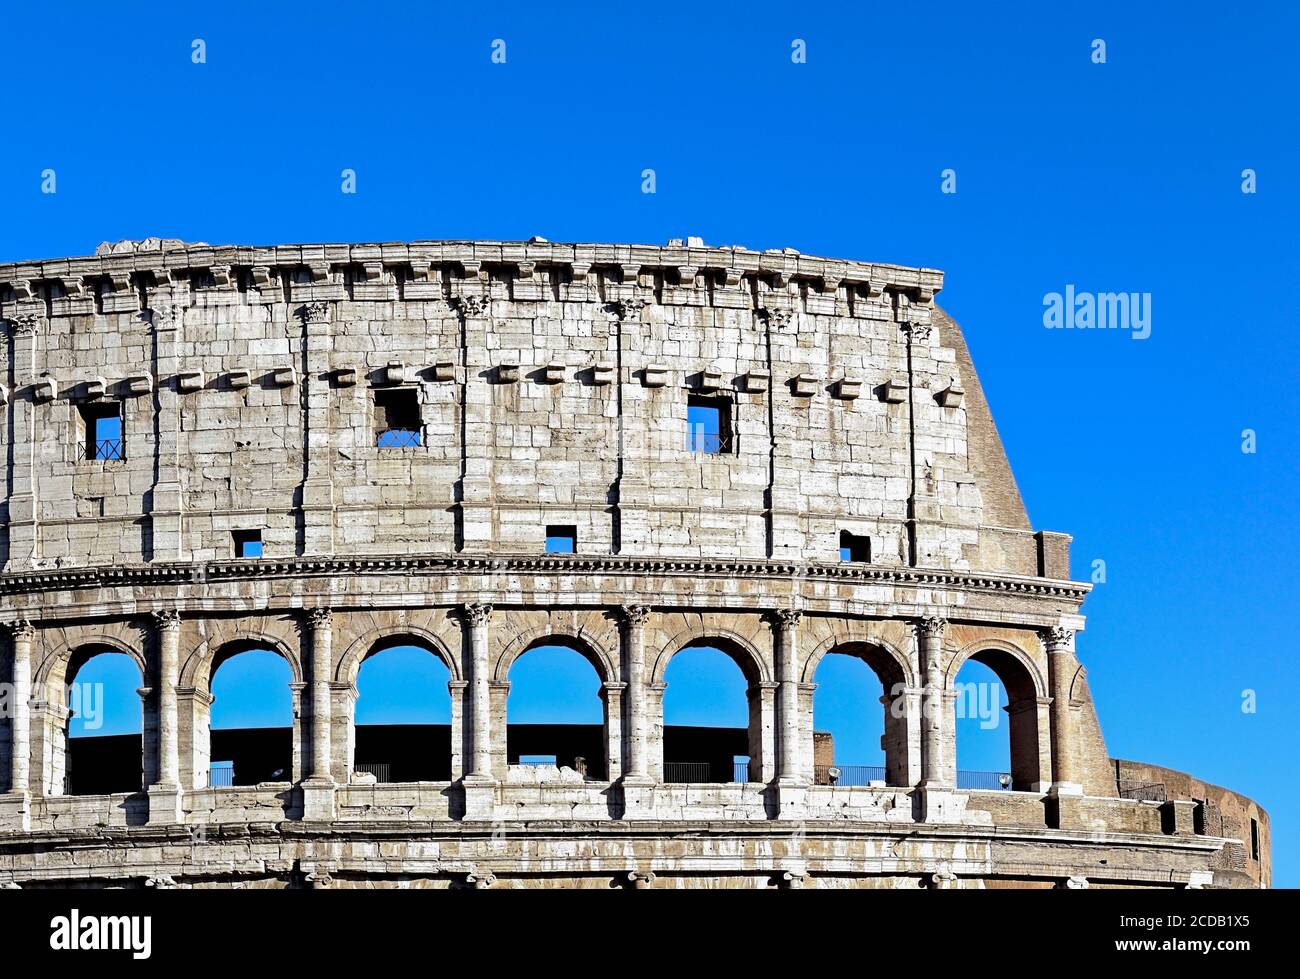 Nahaufnahme des Äußeren des Kolosseums (auch als Flavian Amphitheater bekannt) Colosseo. Klarer blauer Himmel, Kopierbereich. Rom, Latium, Italien, Europa. Stockfoto